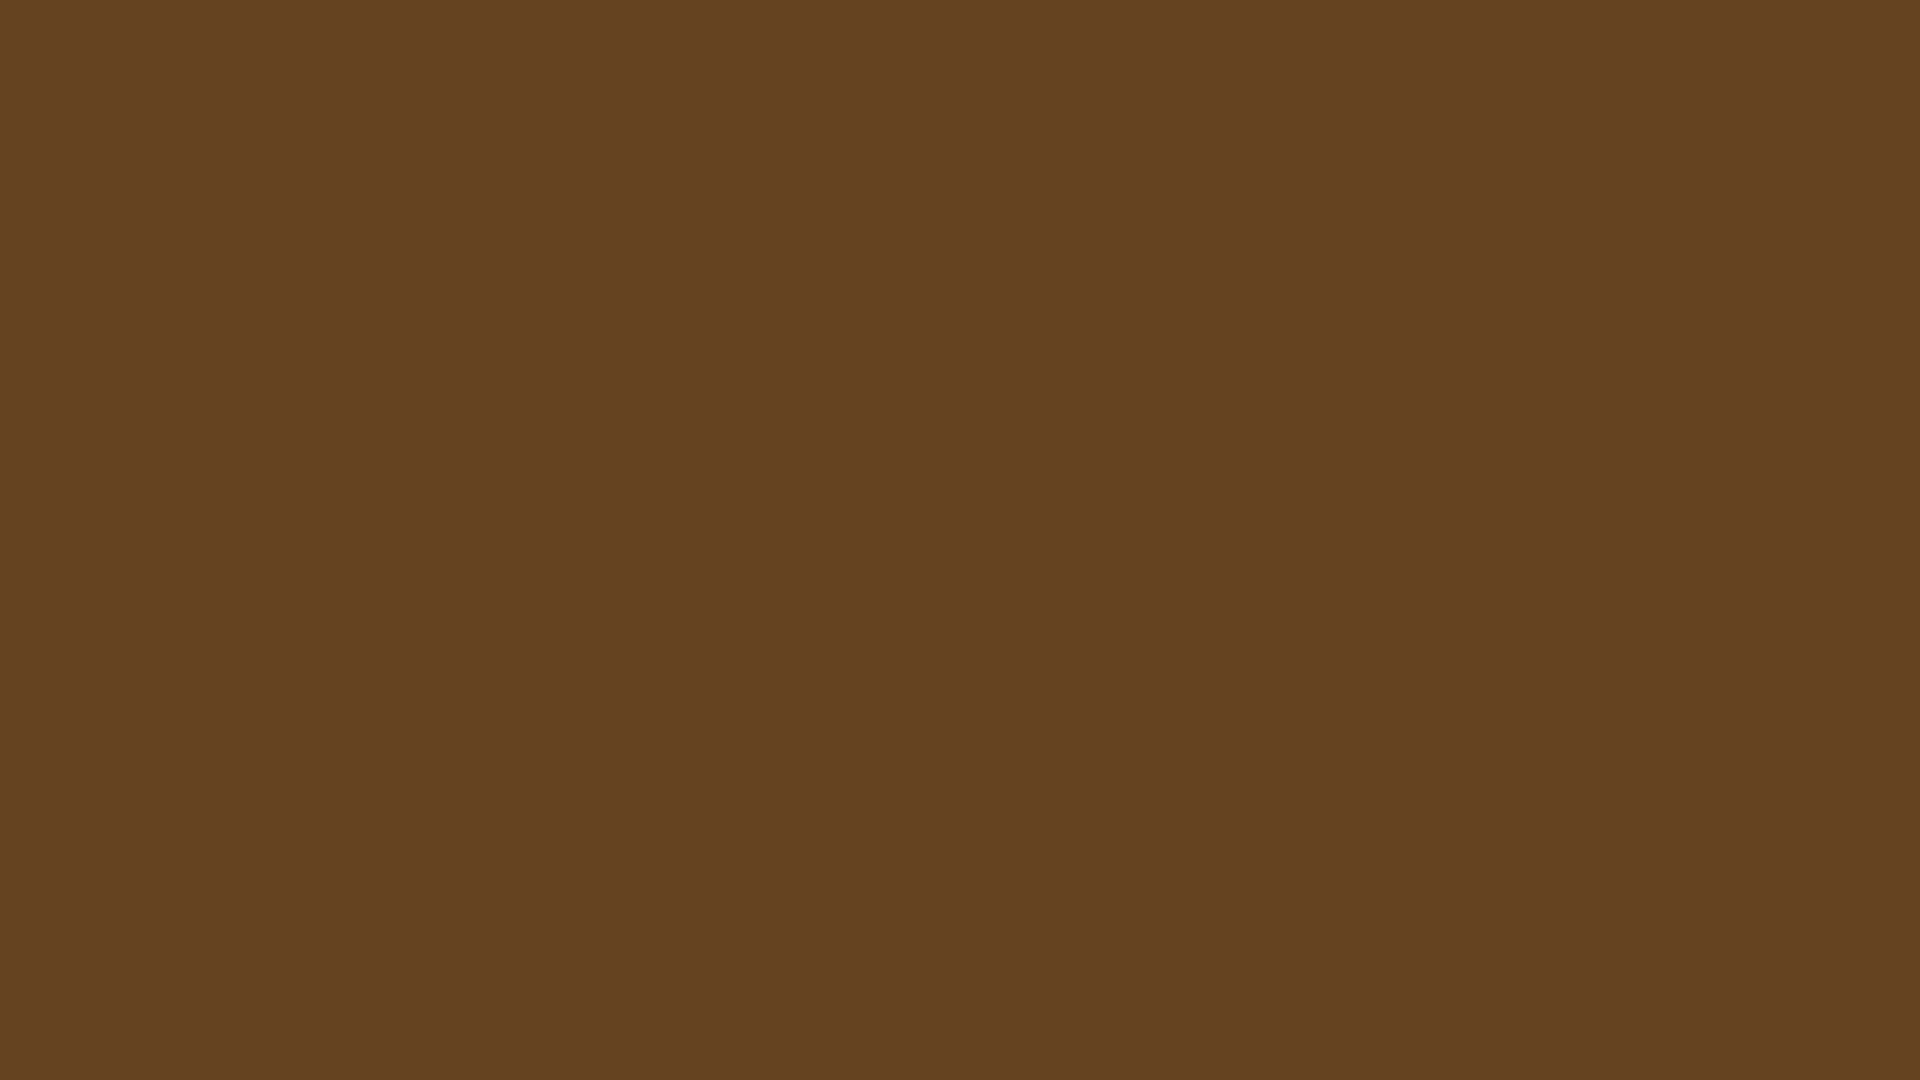 1920x1080 Dark Brown Solid Color Background